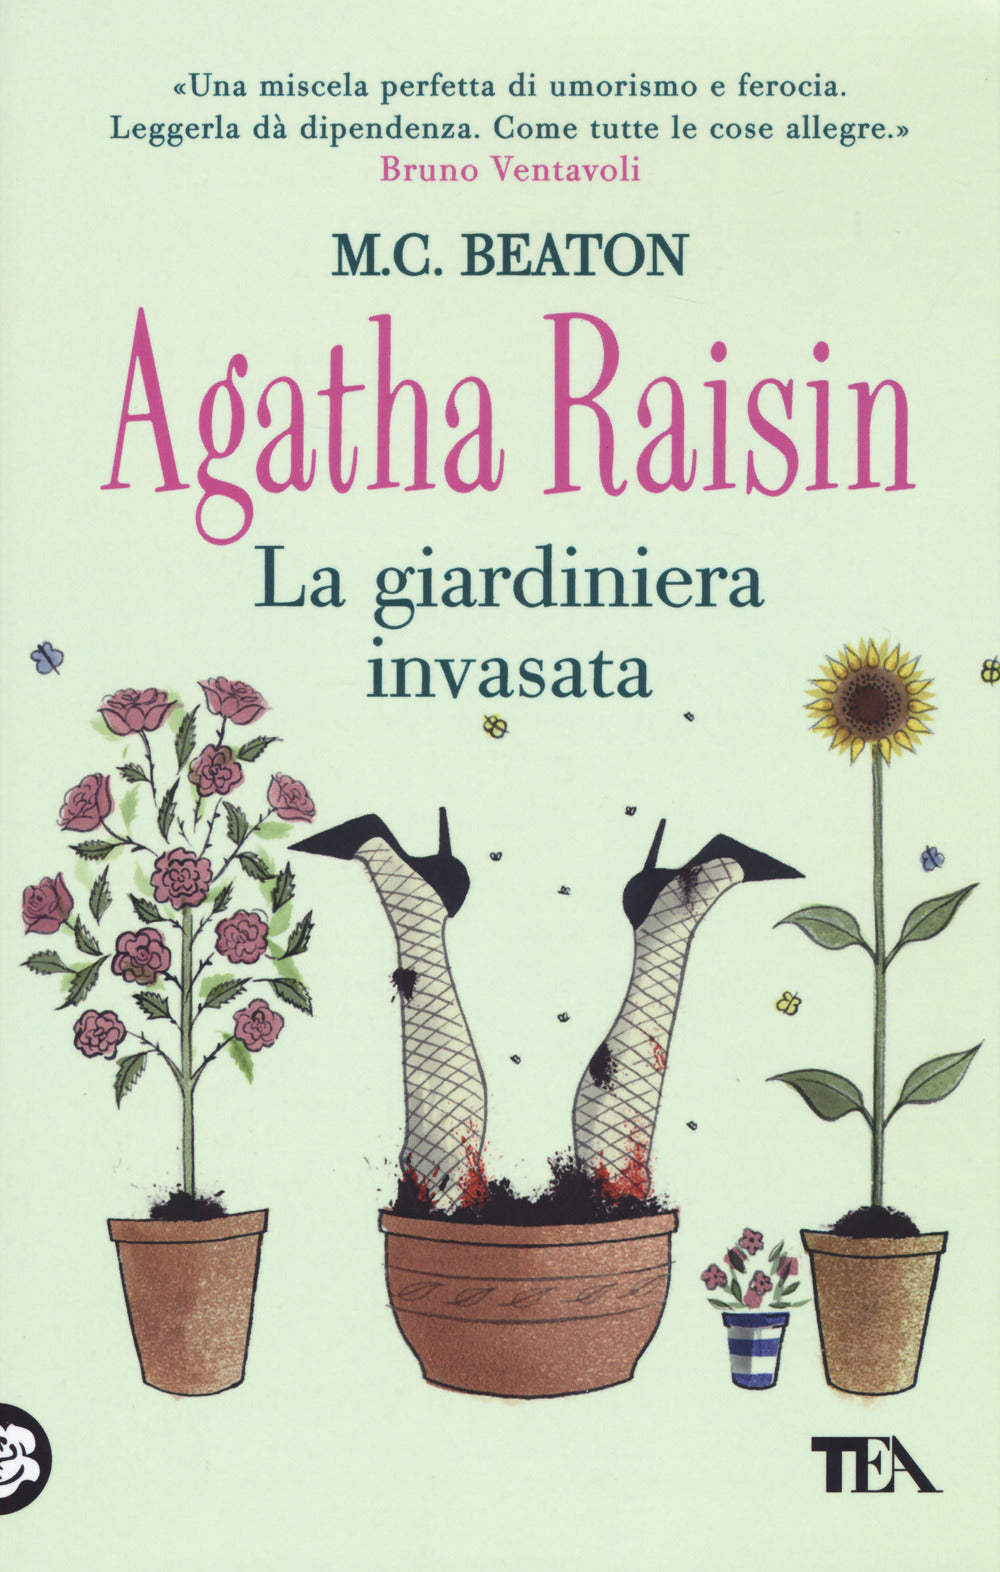 La giardiniera invasata. Agatha Raisin